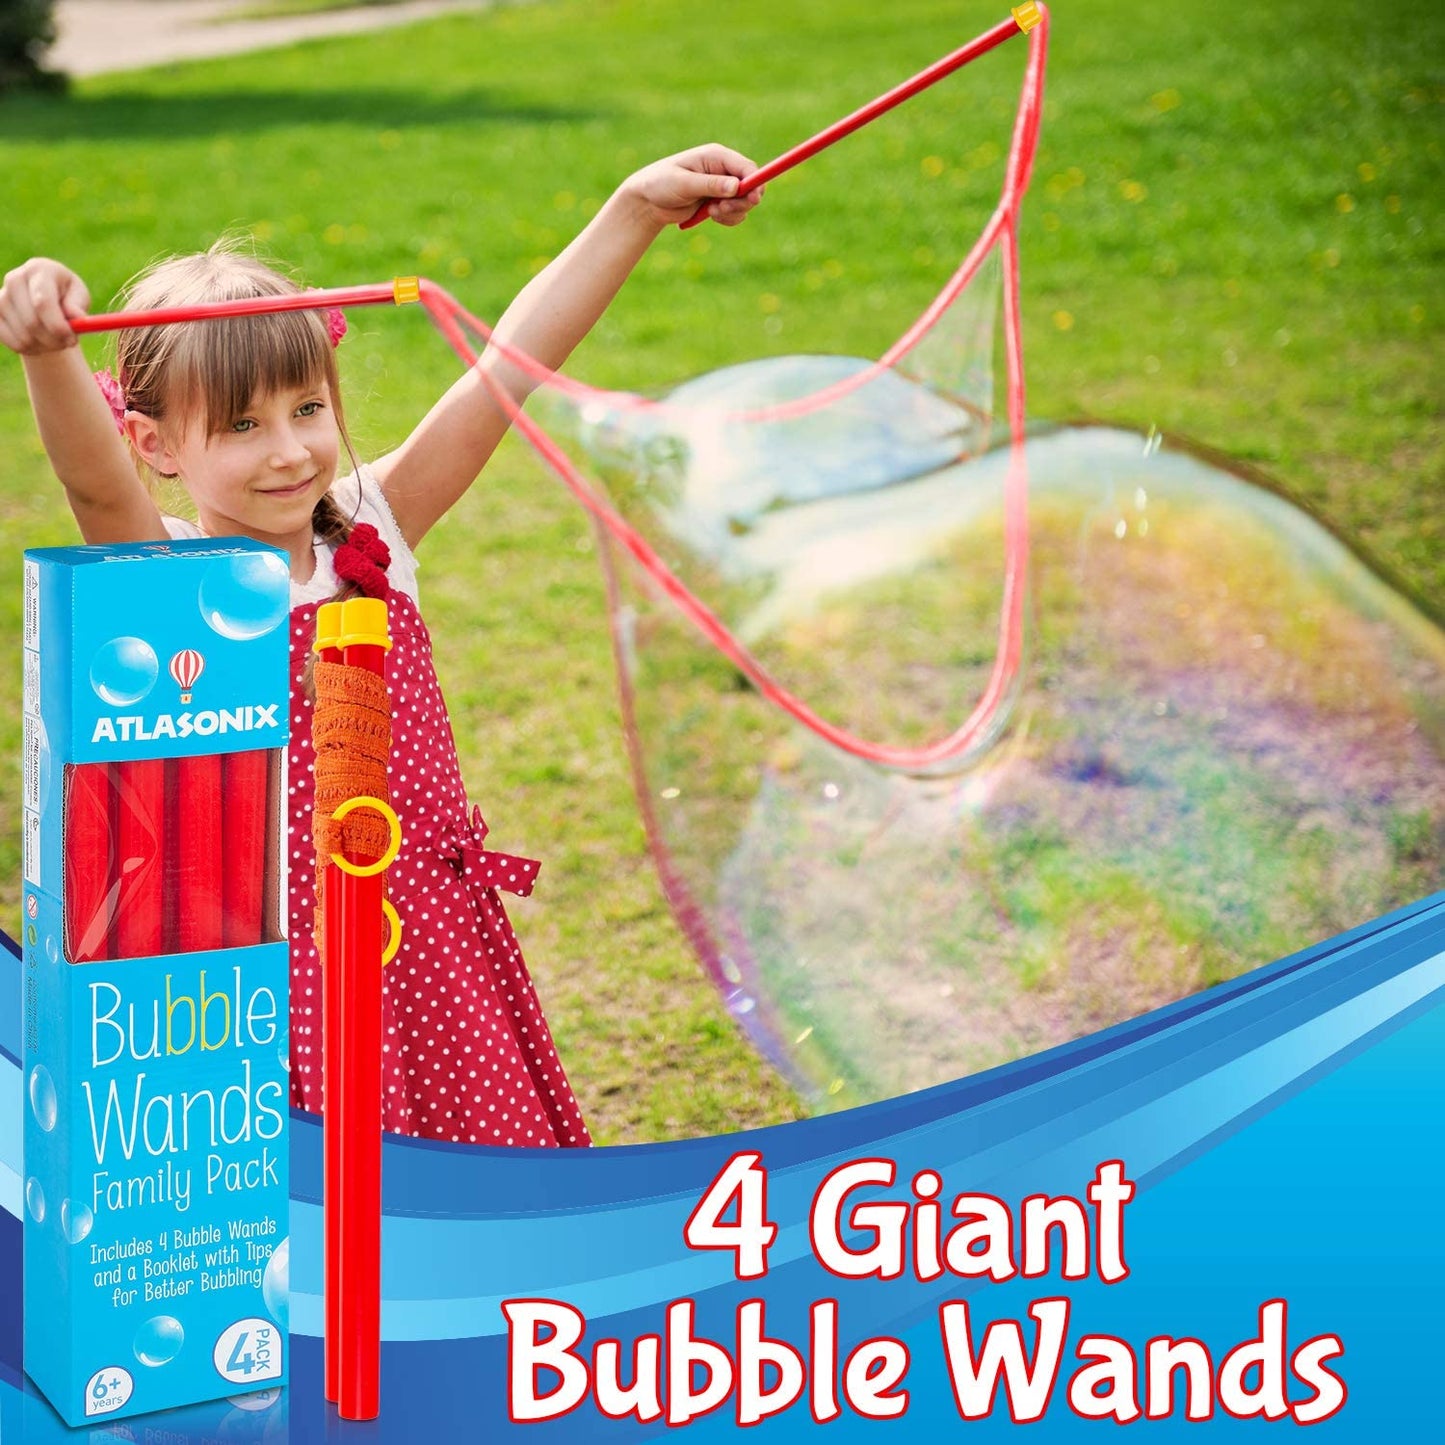 Giant Bubble Wands